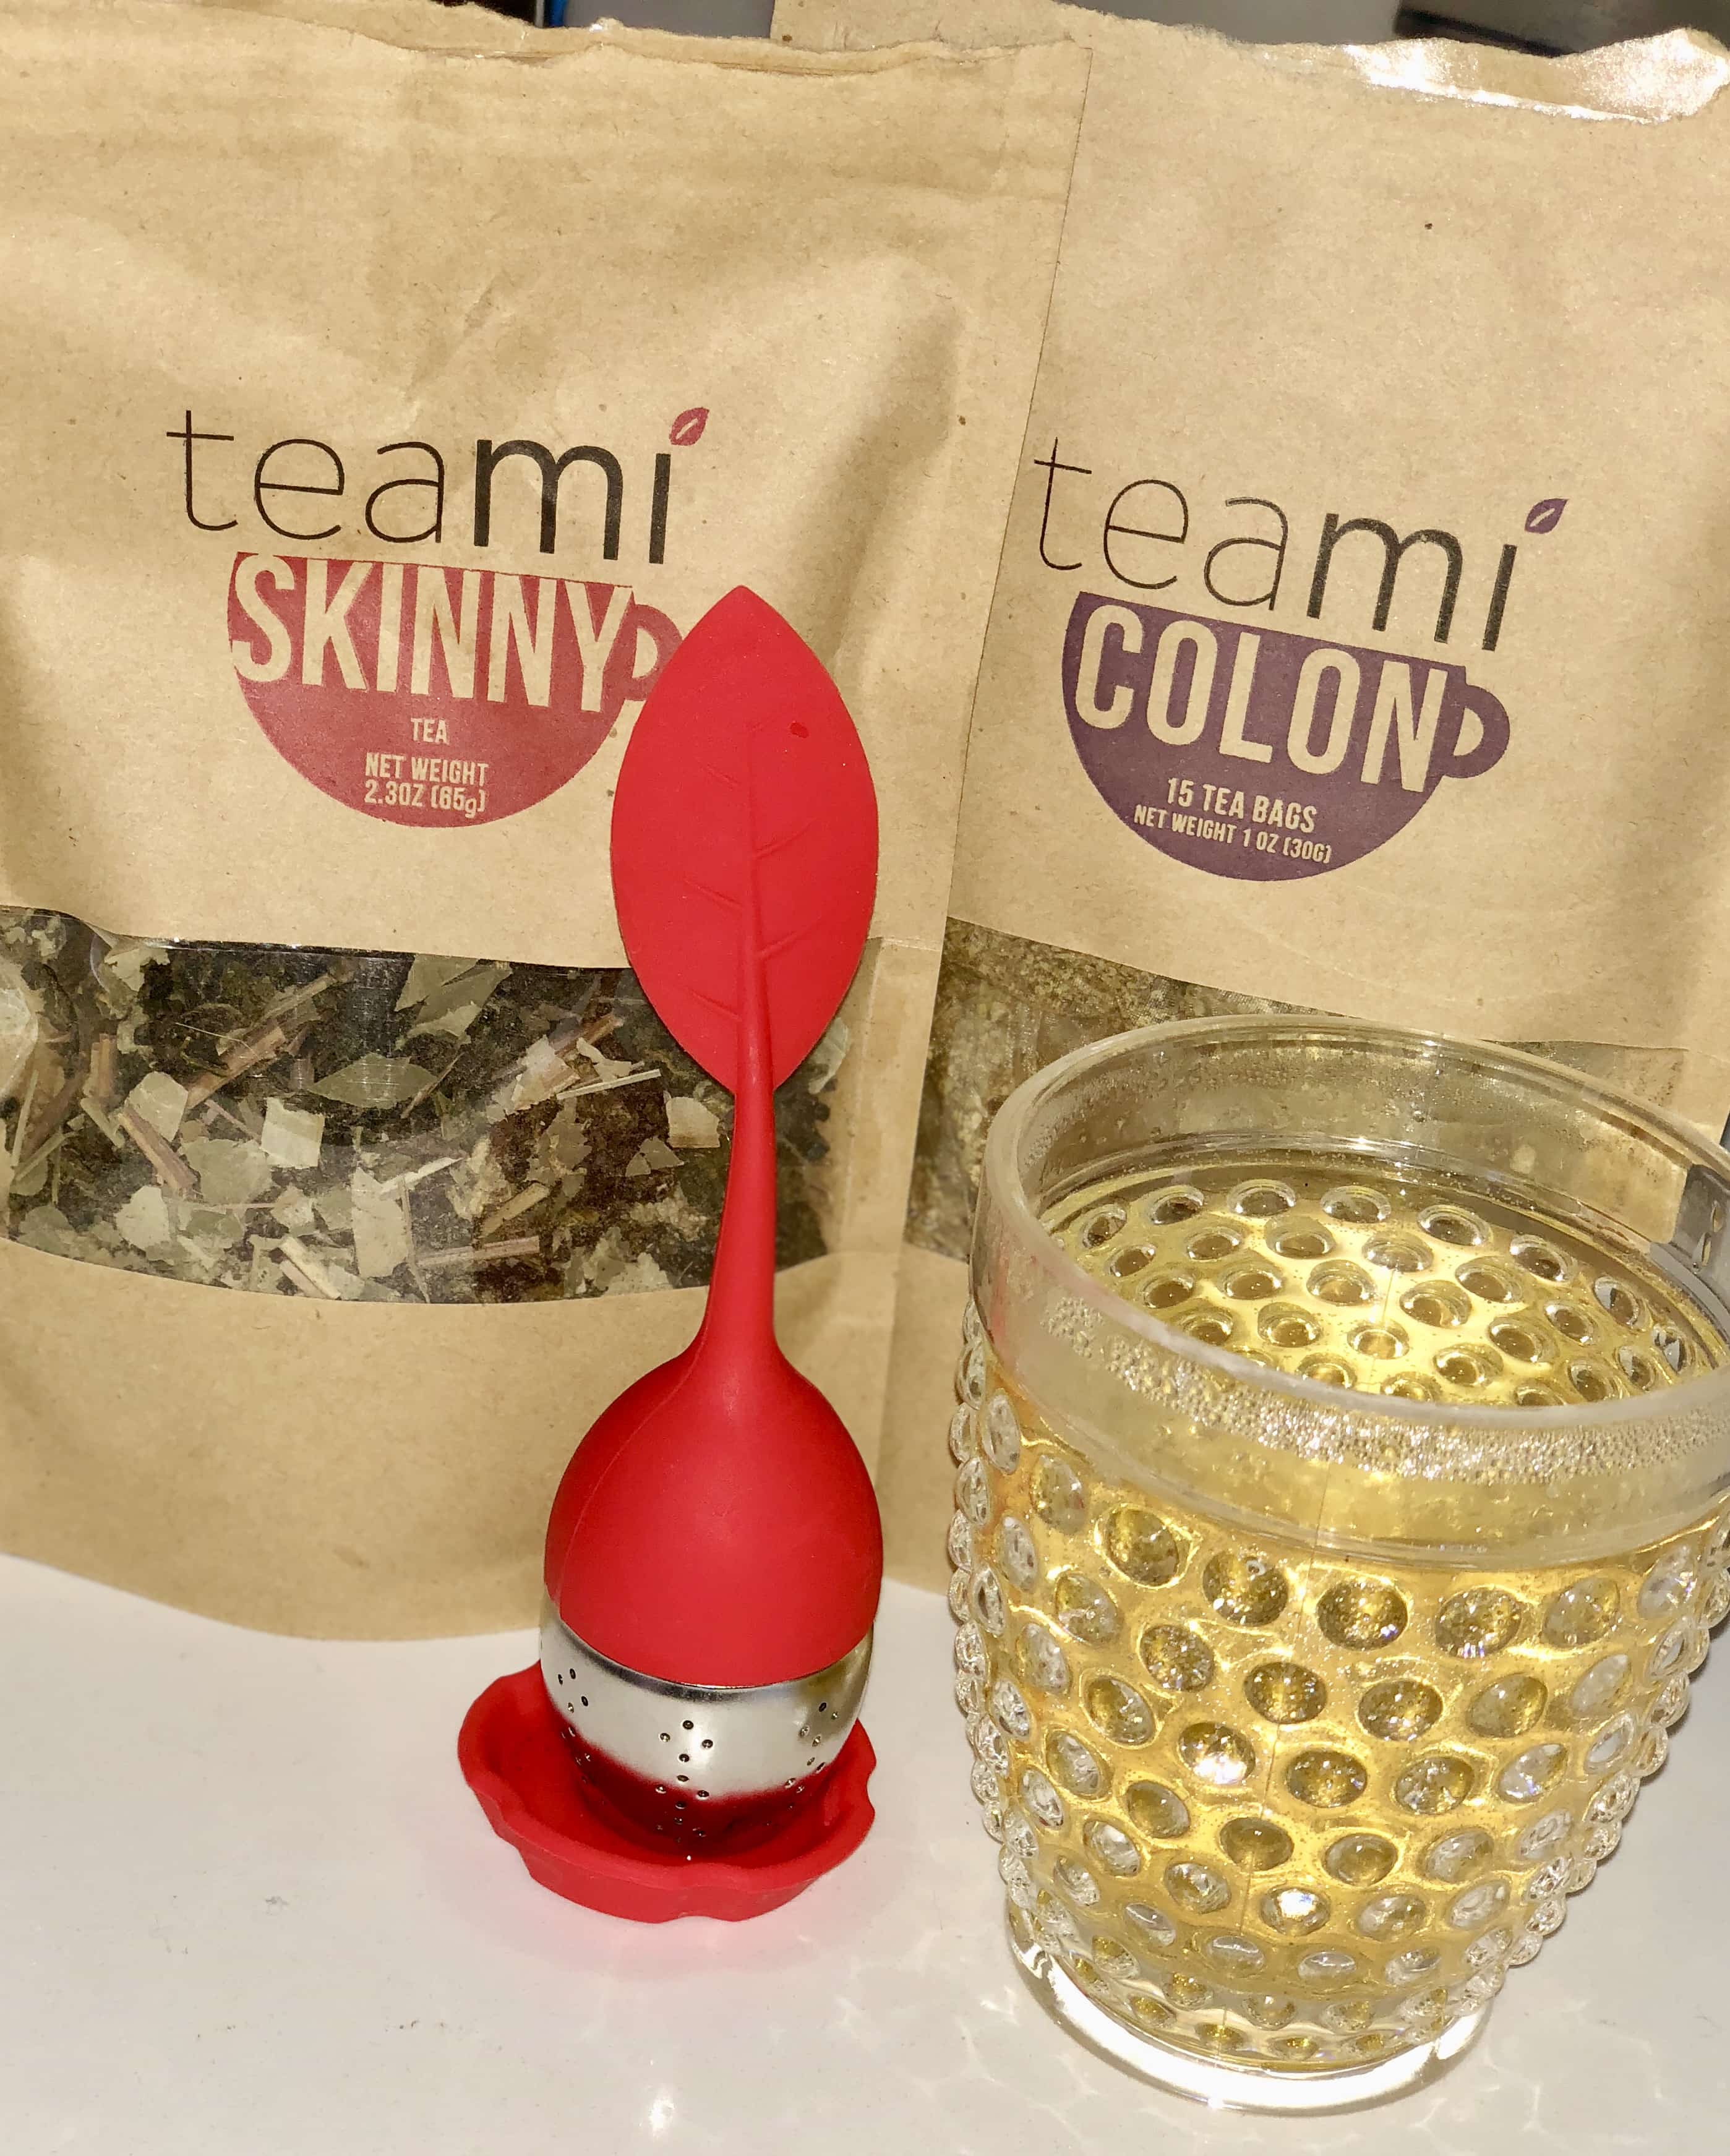 teami skinny tea 30 day detox results does skinny tea work